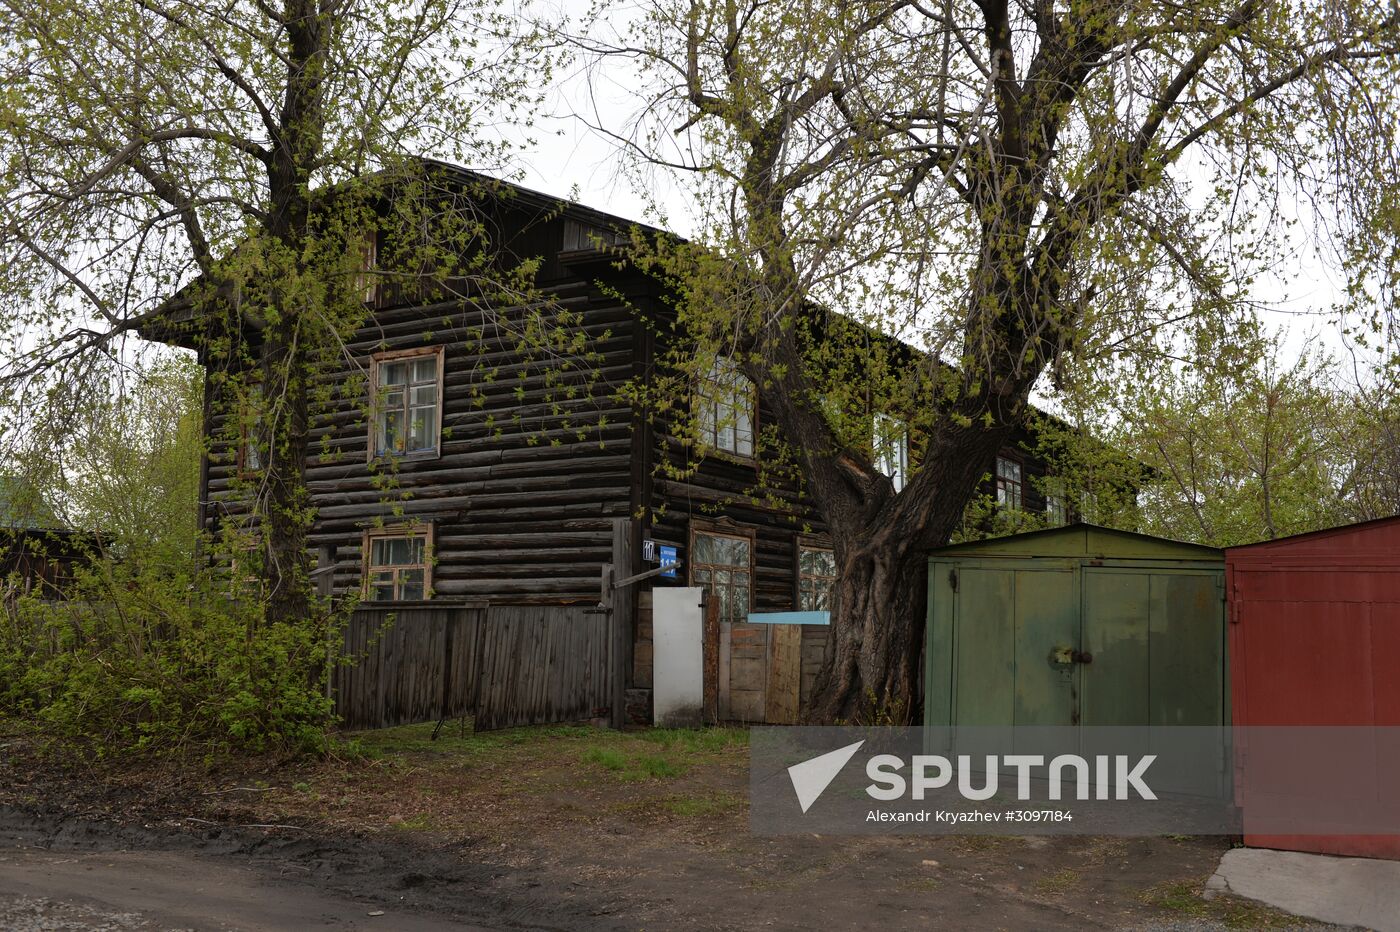 Demolition of dilapidated housing in Novosibirsk